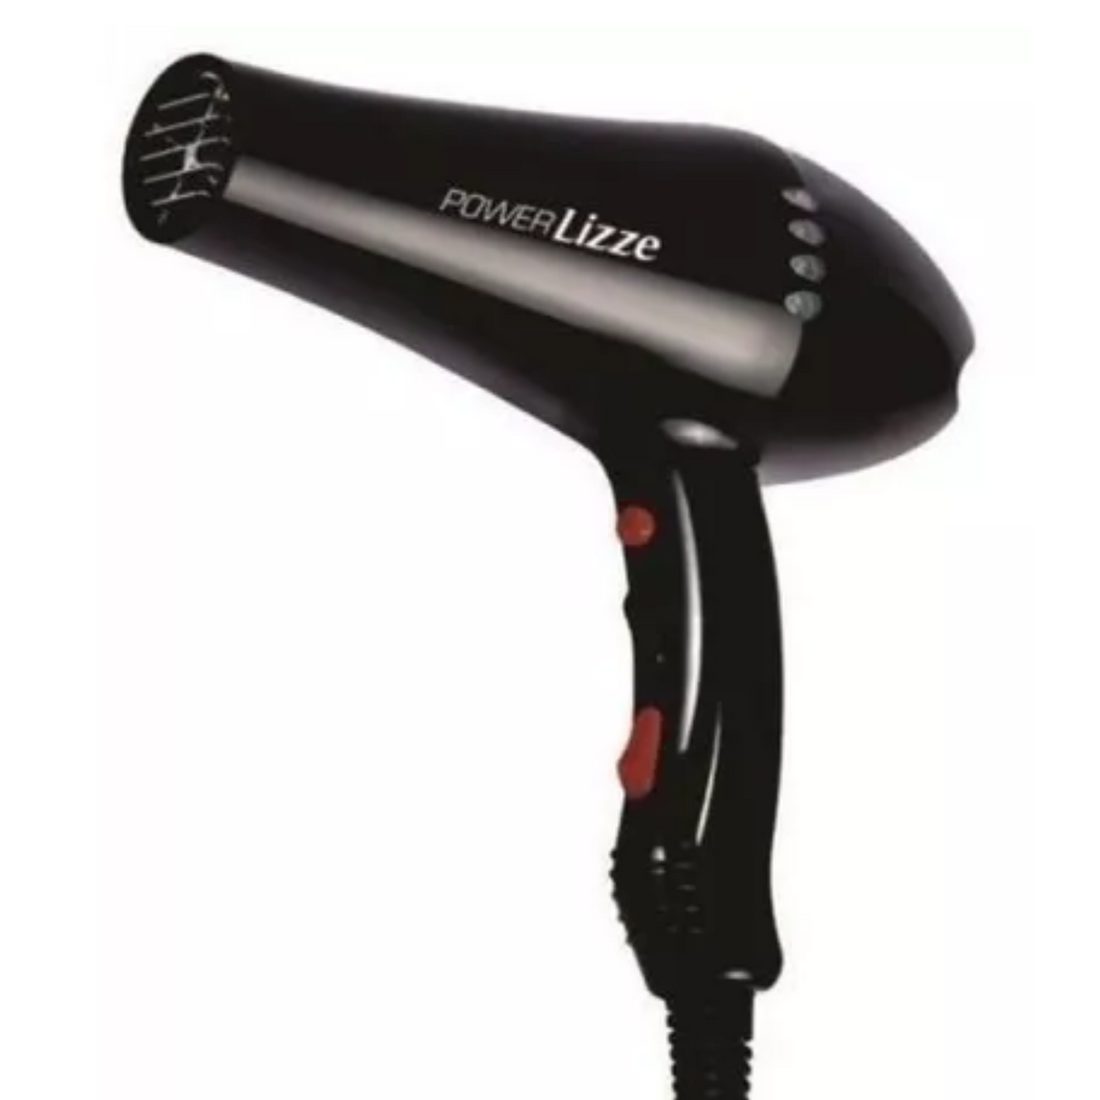 Lizze Secador Power 110 V 150°C 2200W Hair Dyer